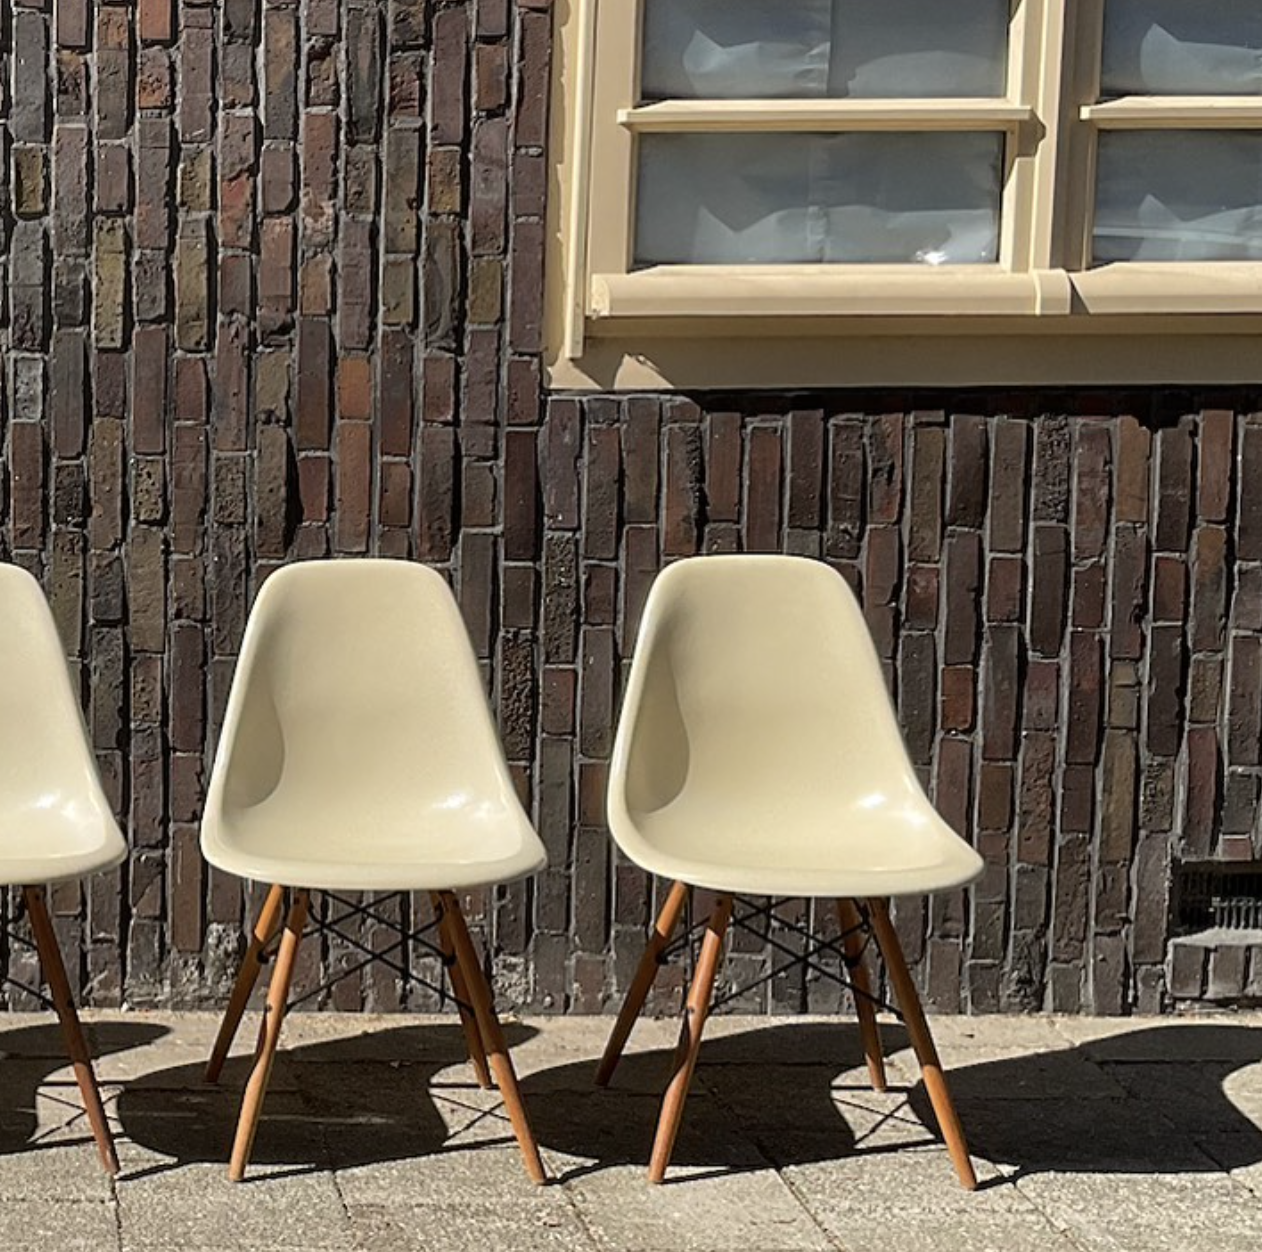 Eames fiberglass chairs